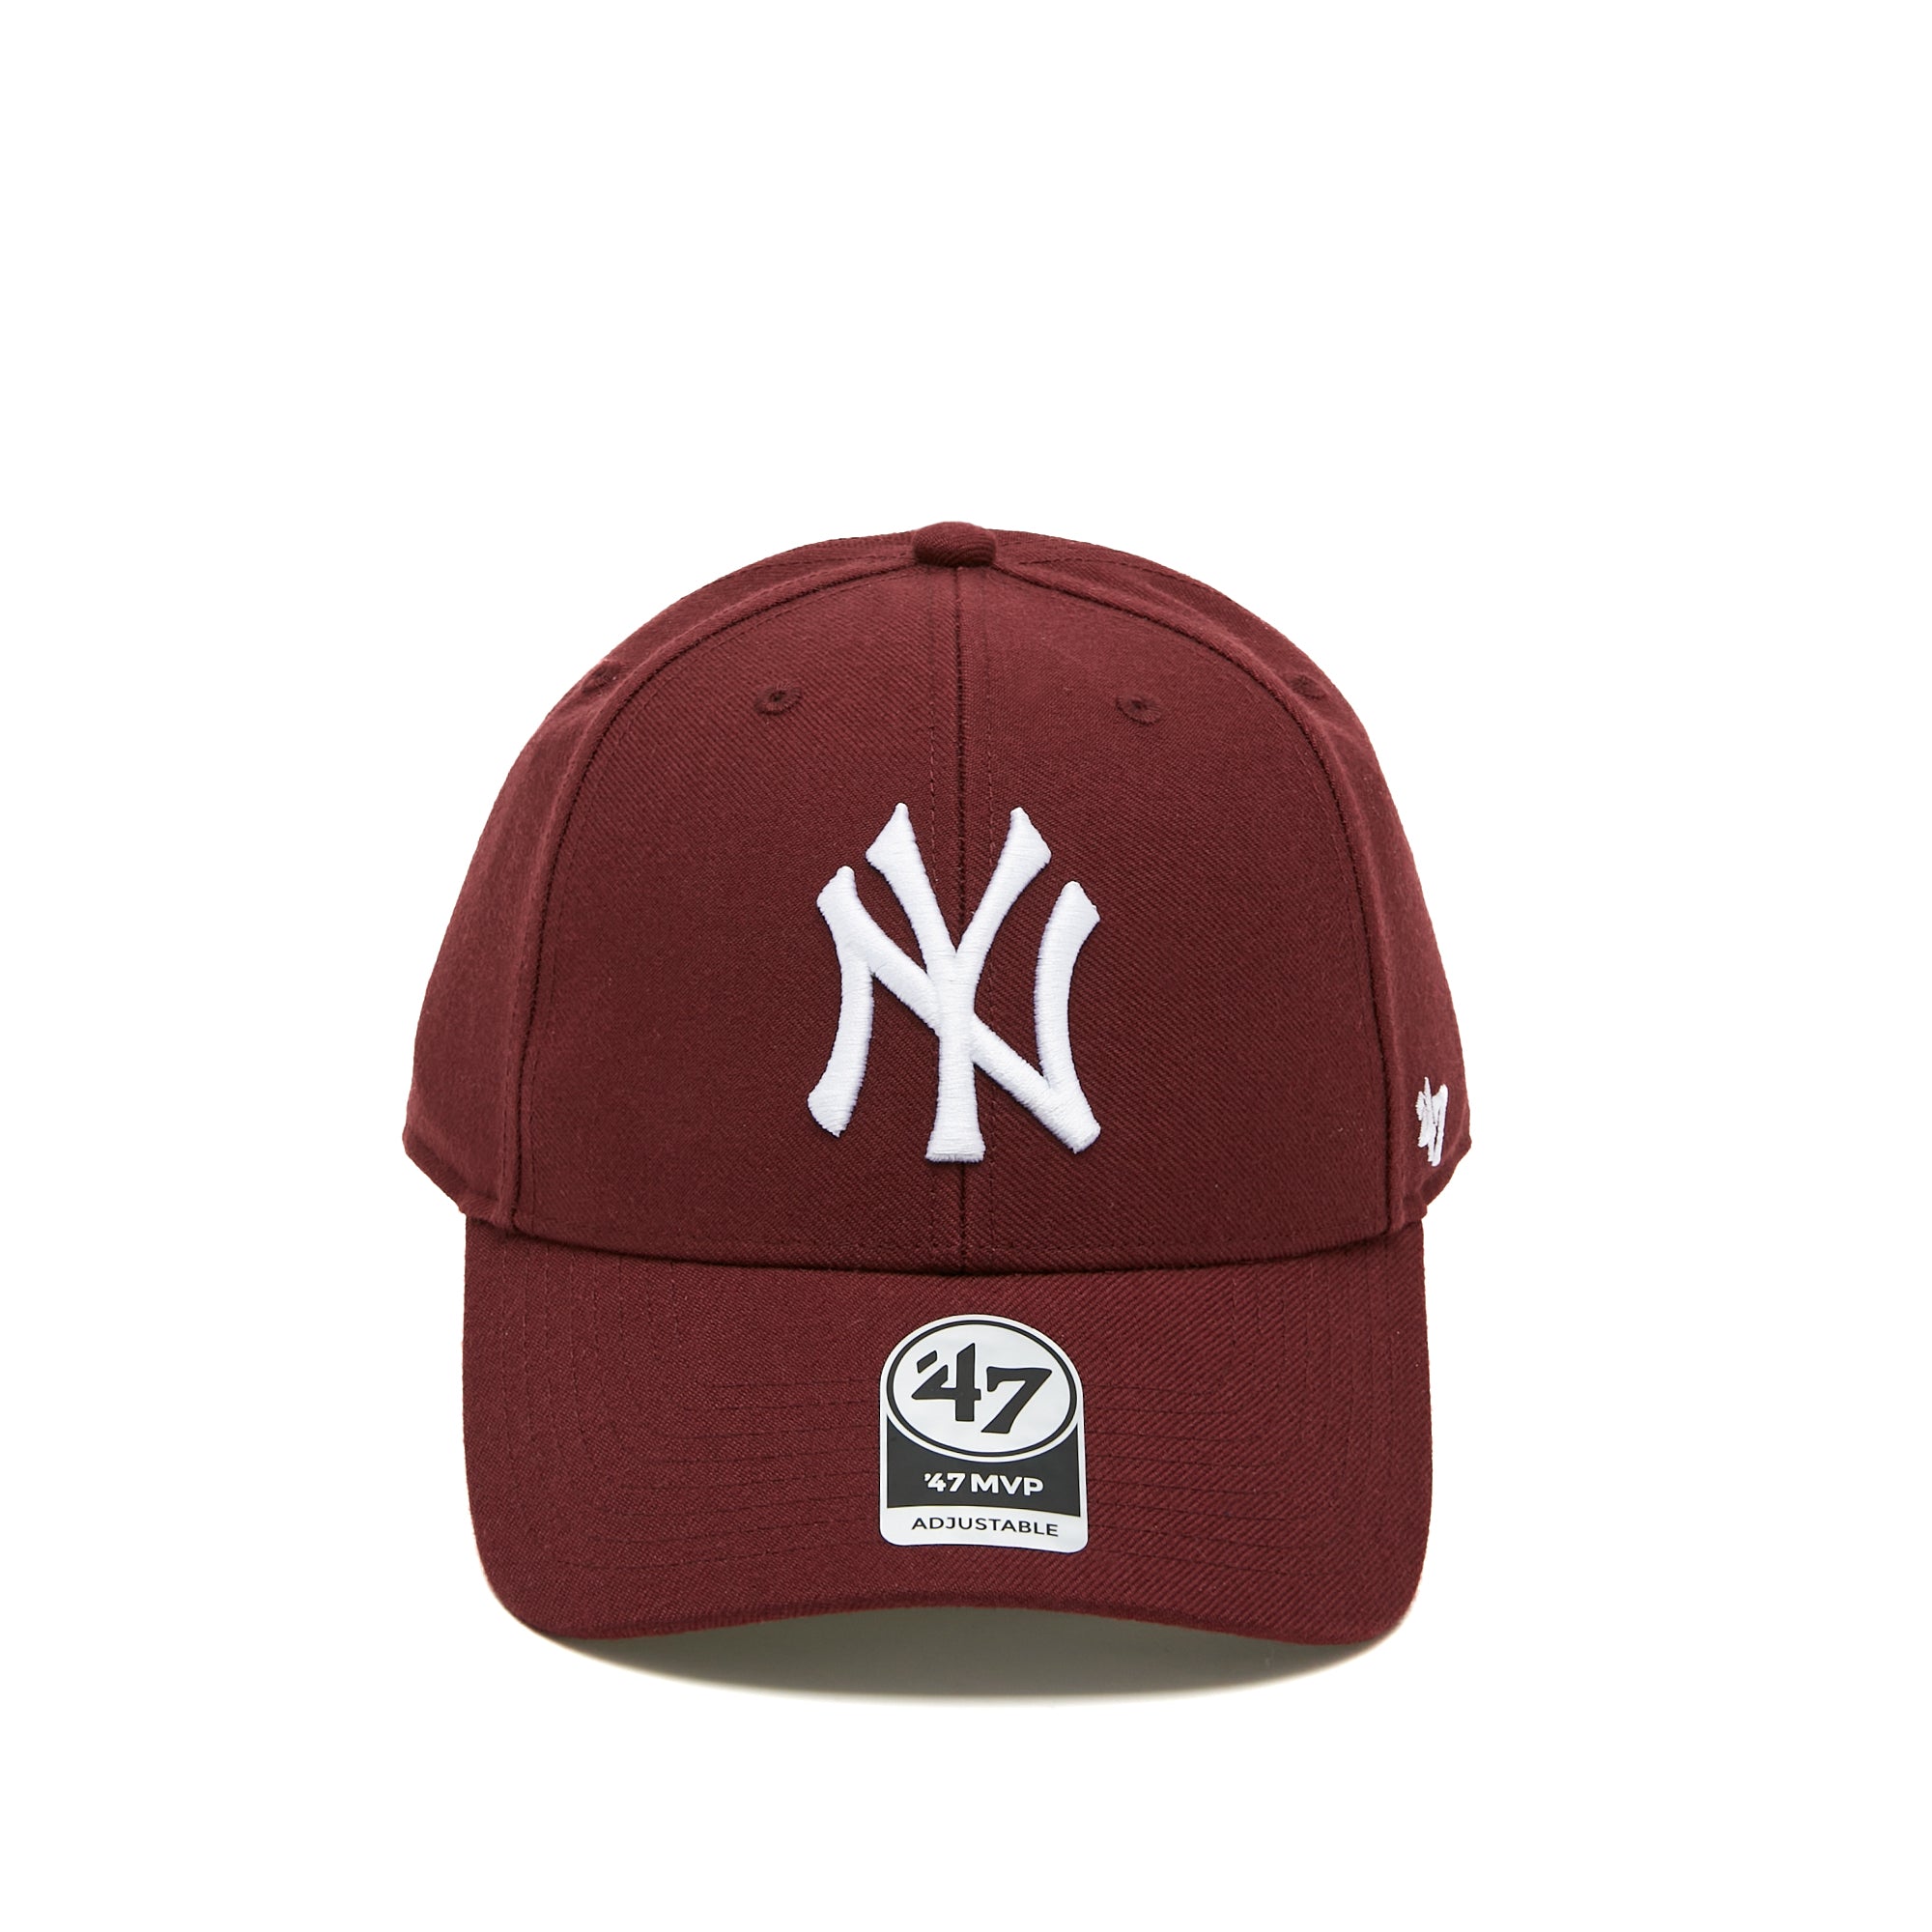 New York Yankees 47 Mvp Khaki/Black Adjustable - 47 Brand 